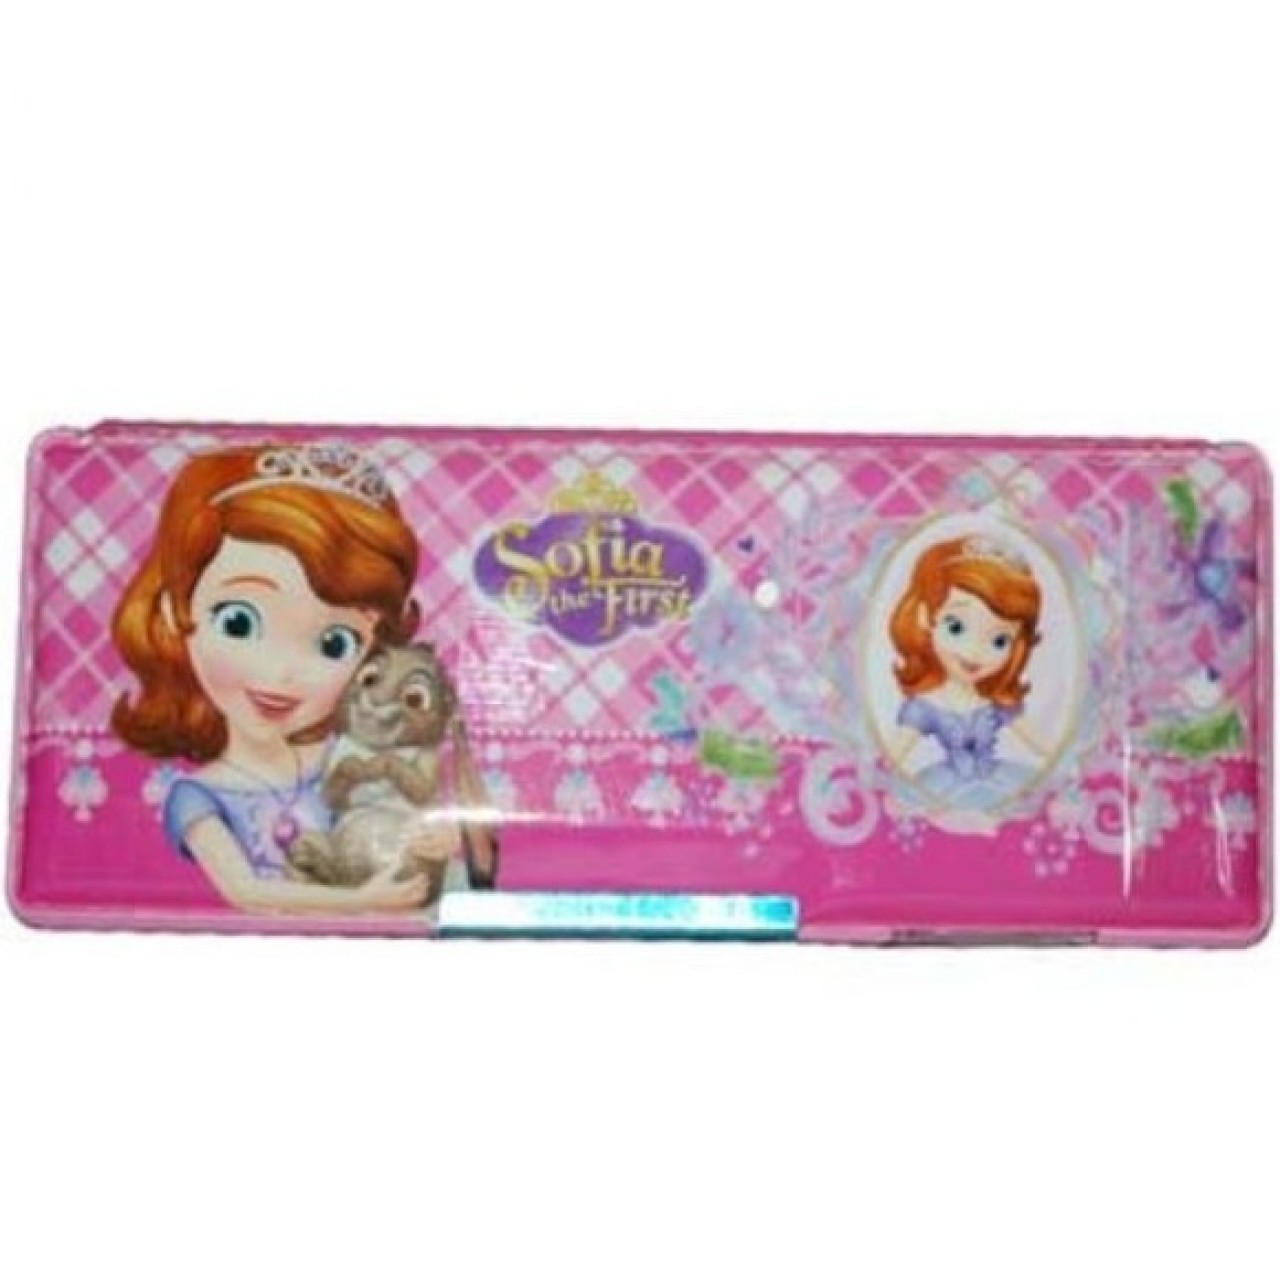 Sofia Princess Pencil Case For Girls - Multifunctional Geometry Box